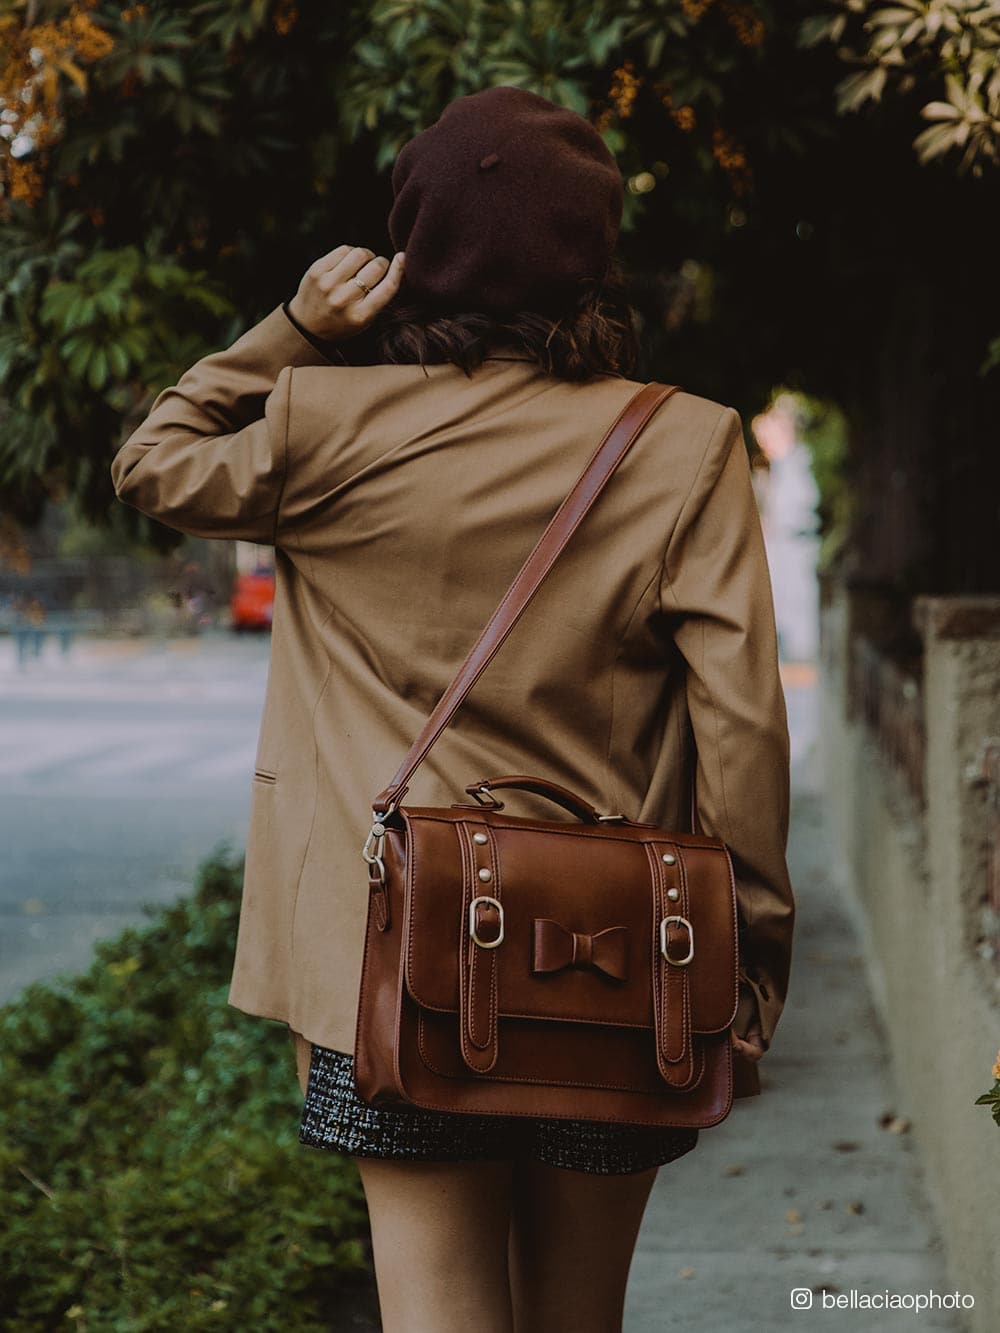 Womens Vegan Leather Backpack Purse Crossbody Laptop Messenger Bag